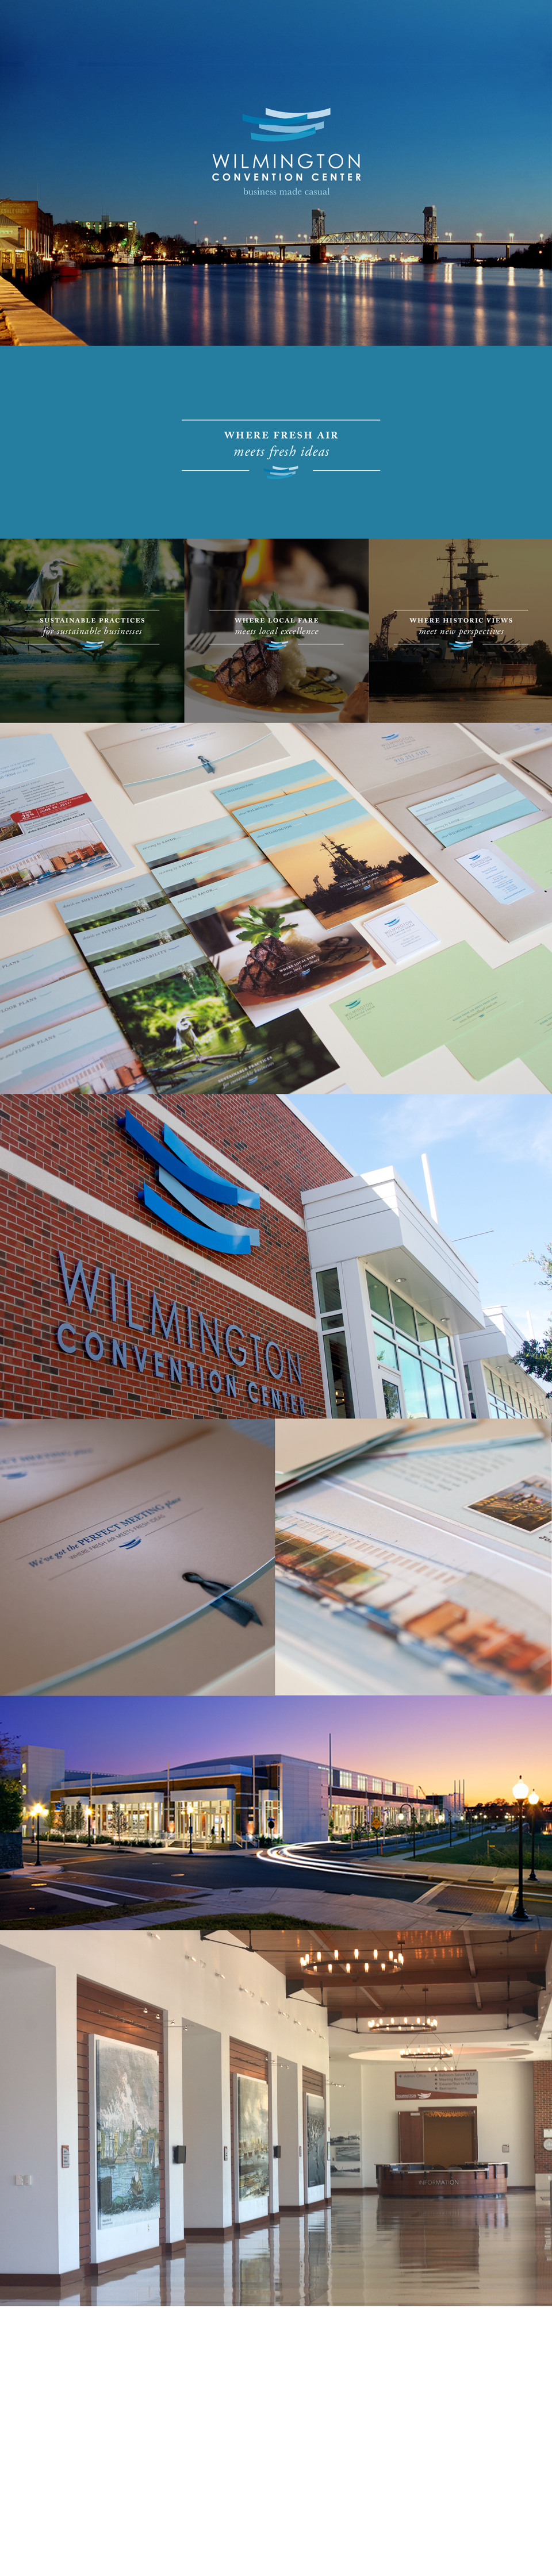 Wilmington Convention Center